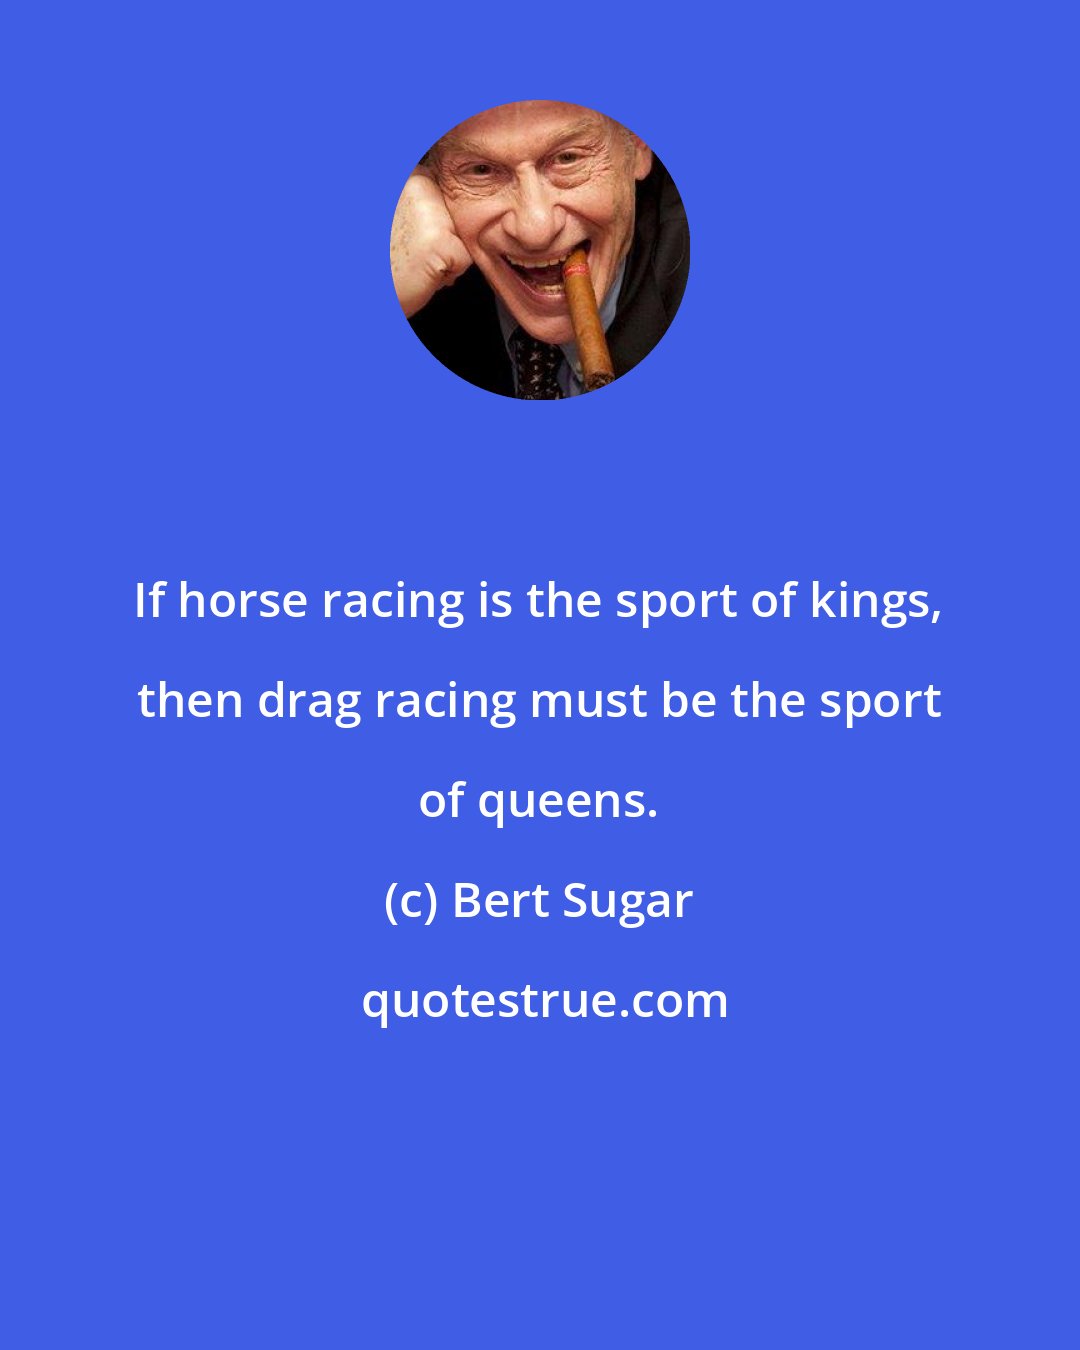 Bert Sugar: If horse racing is the sport of kings, then drag racing must be the sport of queens.